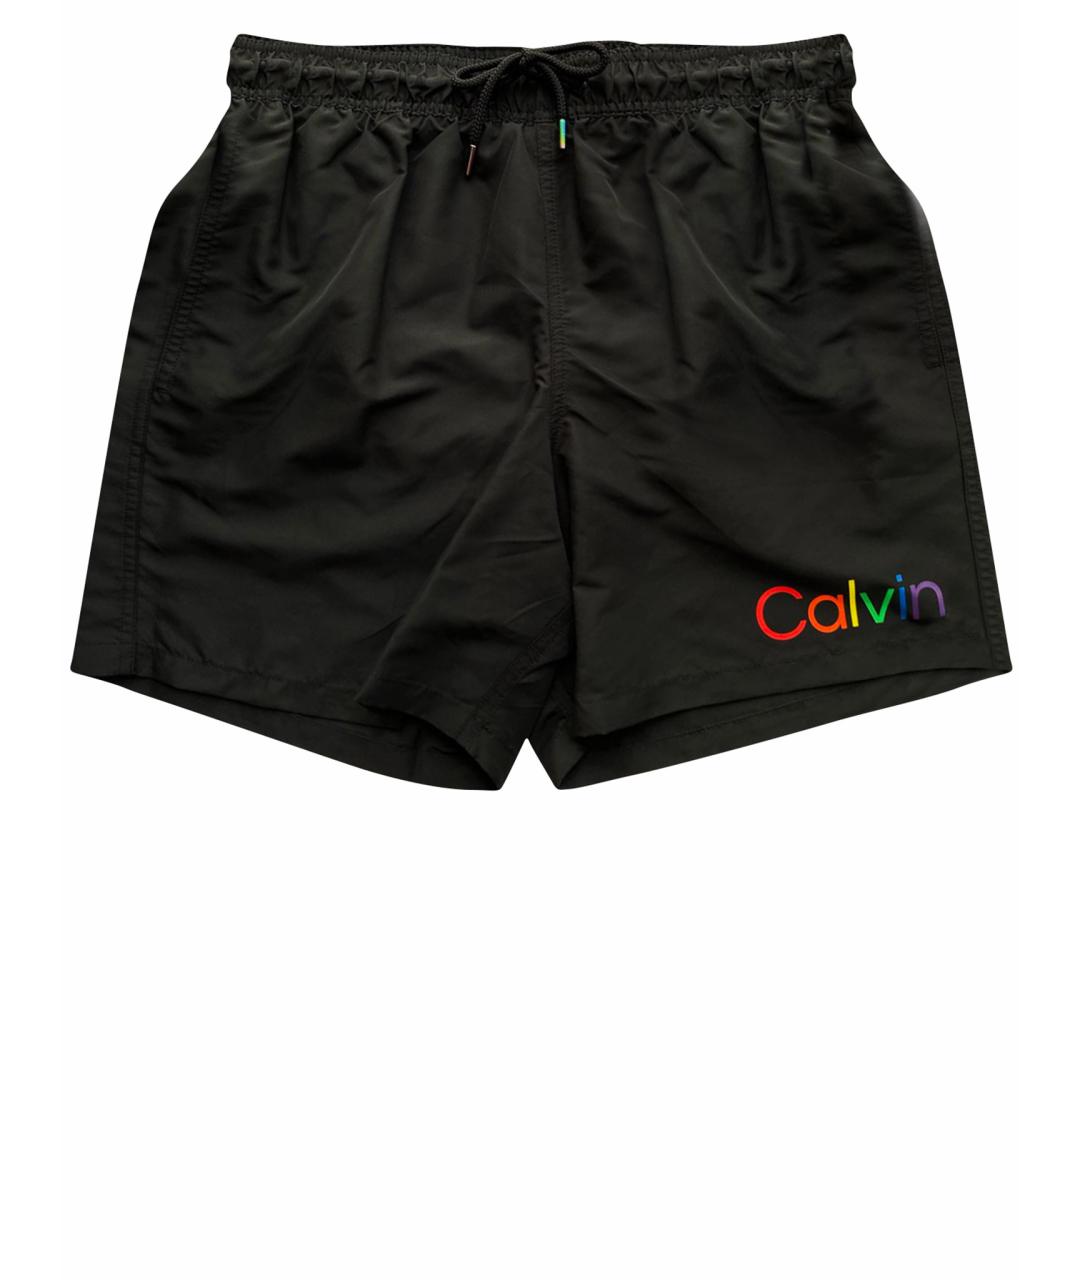 CALVIN KLEIN Черные полиэстеровые шорты, фото 1